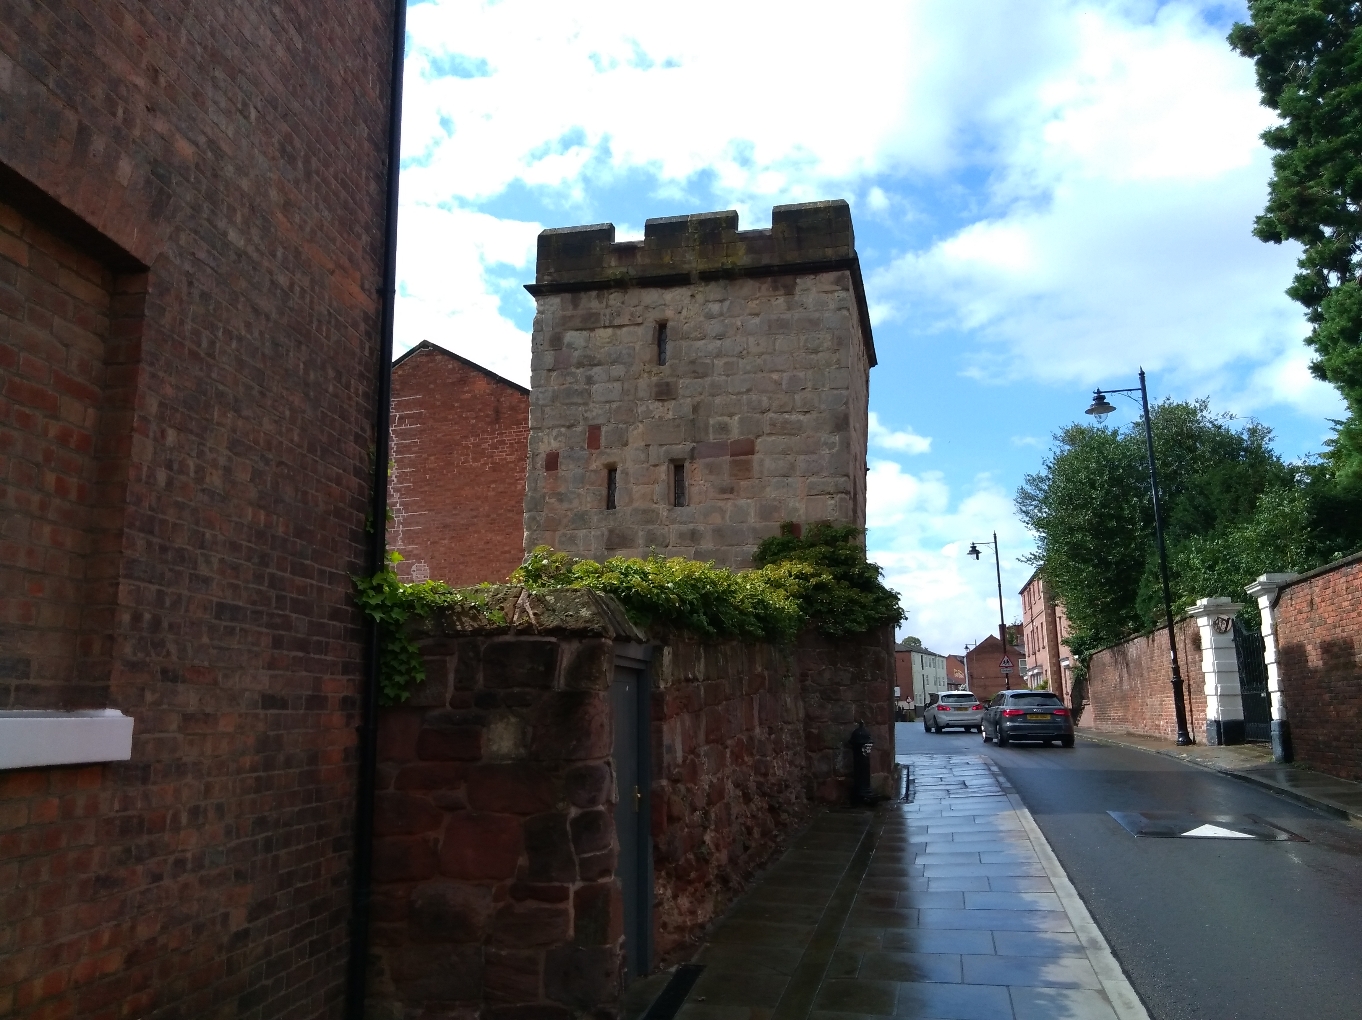 Shrewsbury - medieval watchtower